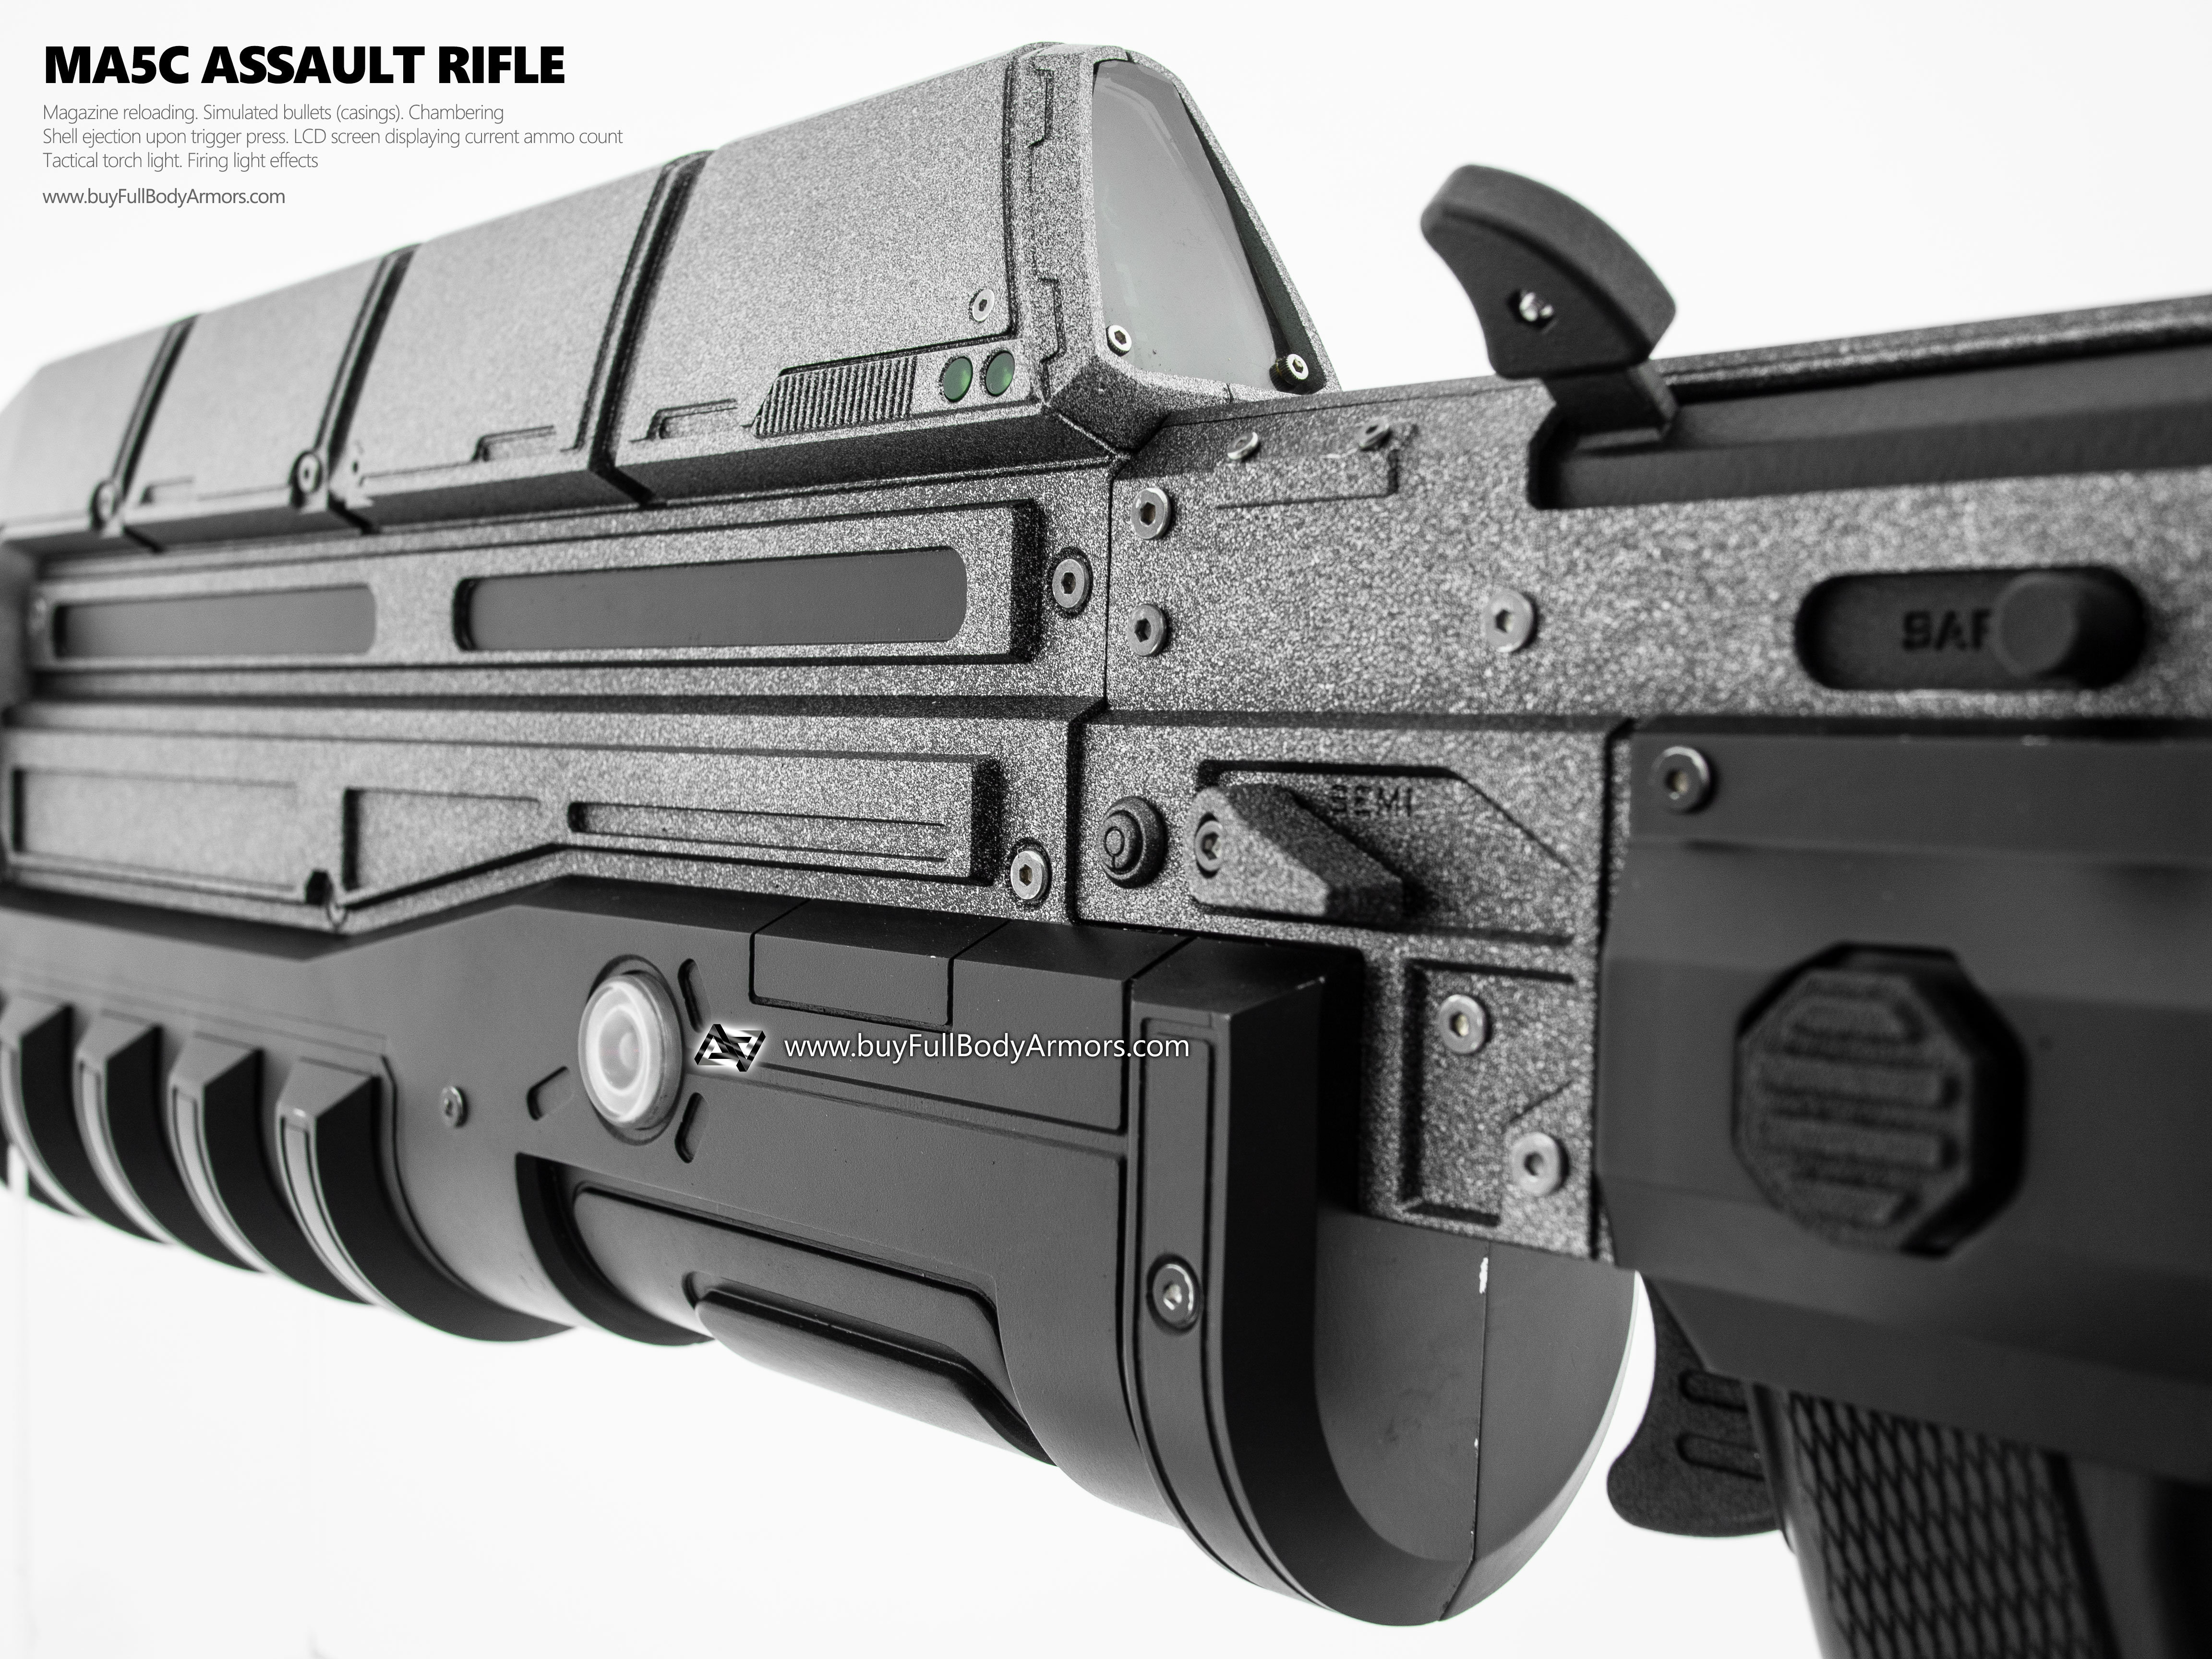 Halo MA5C assault rifle